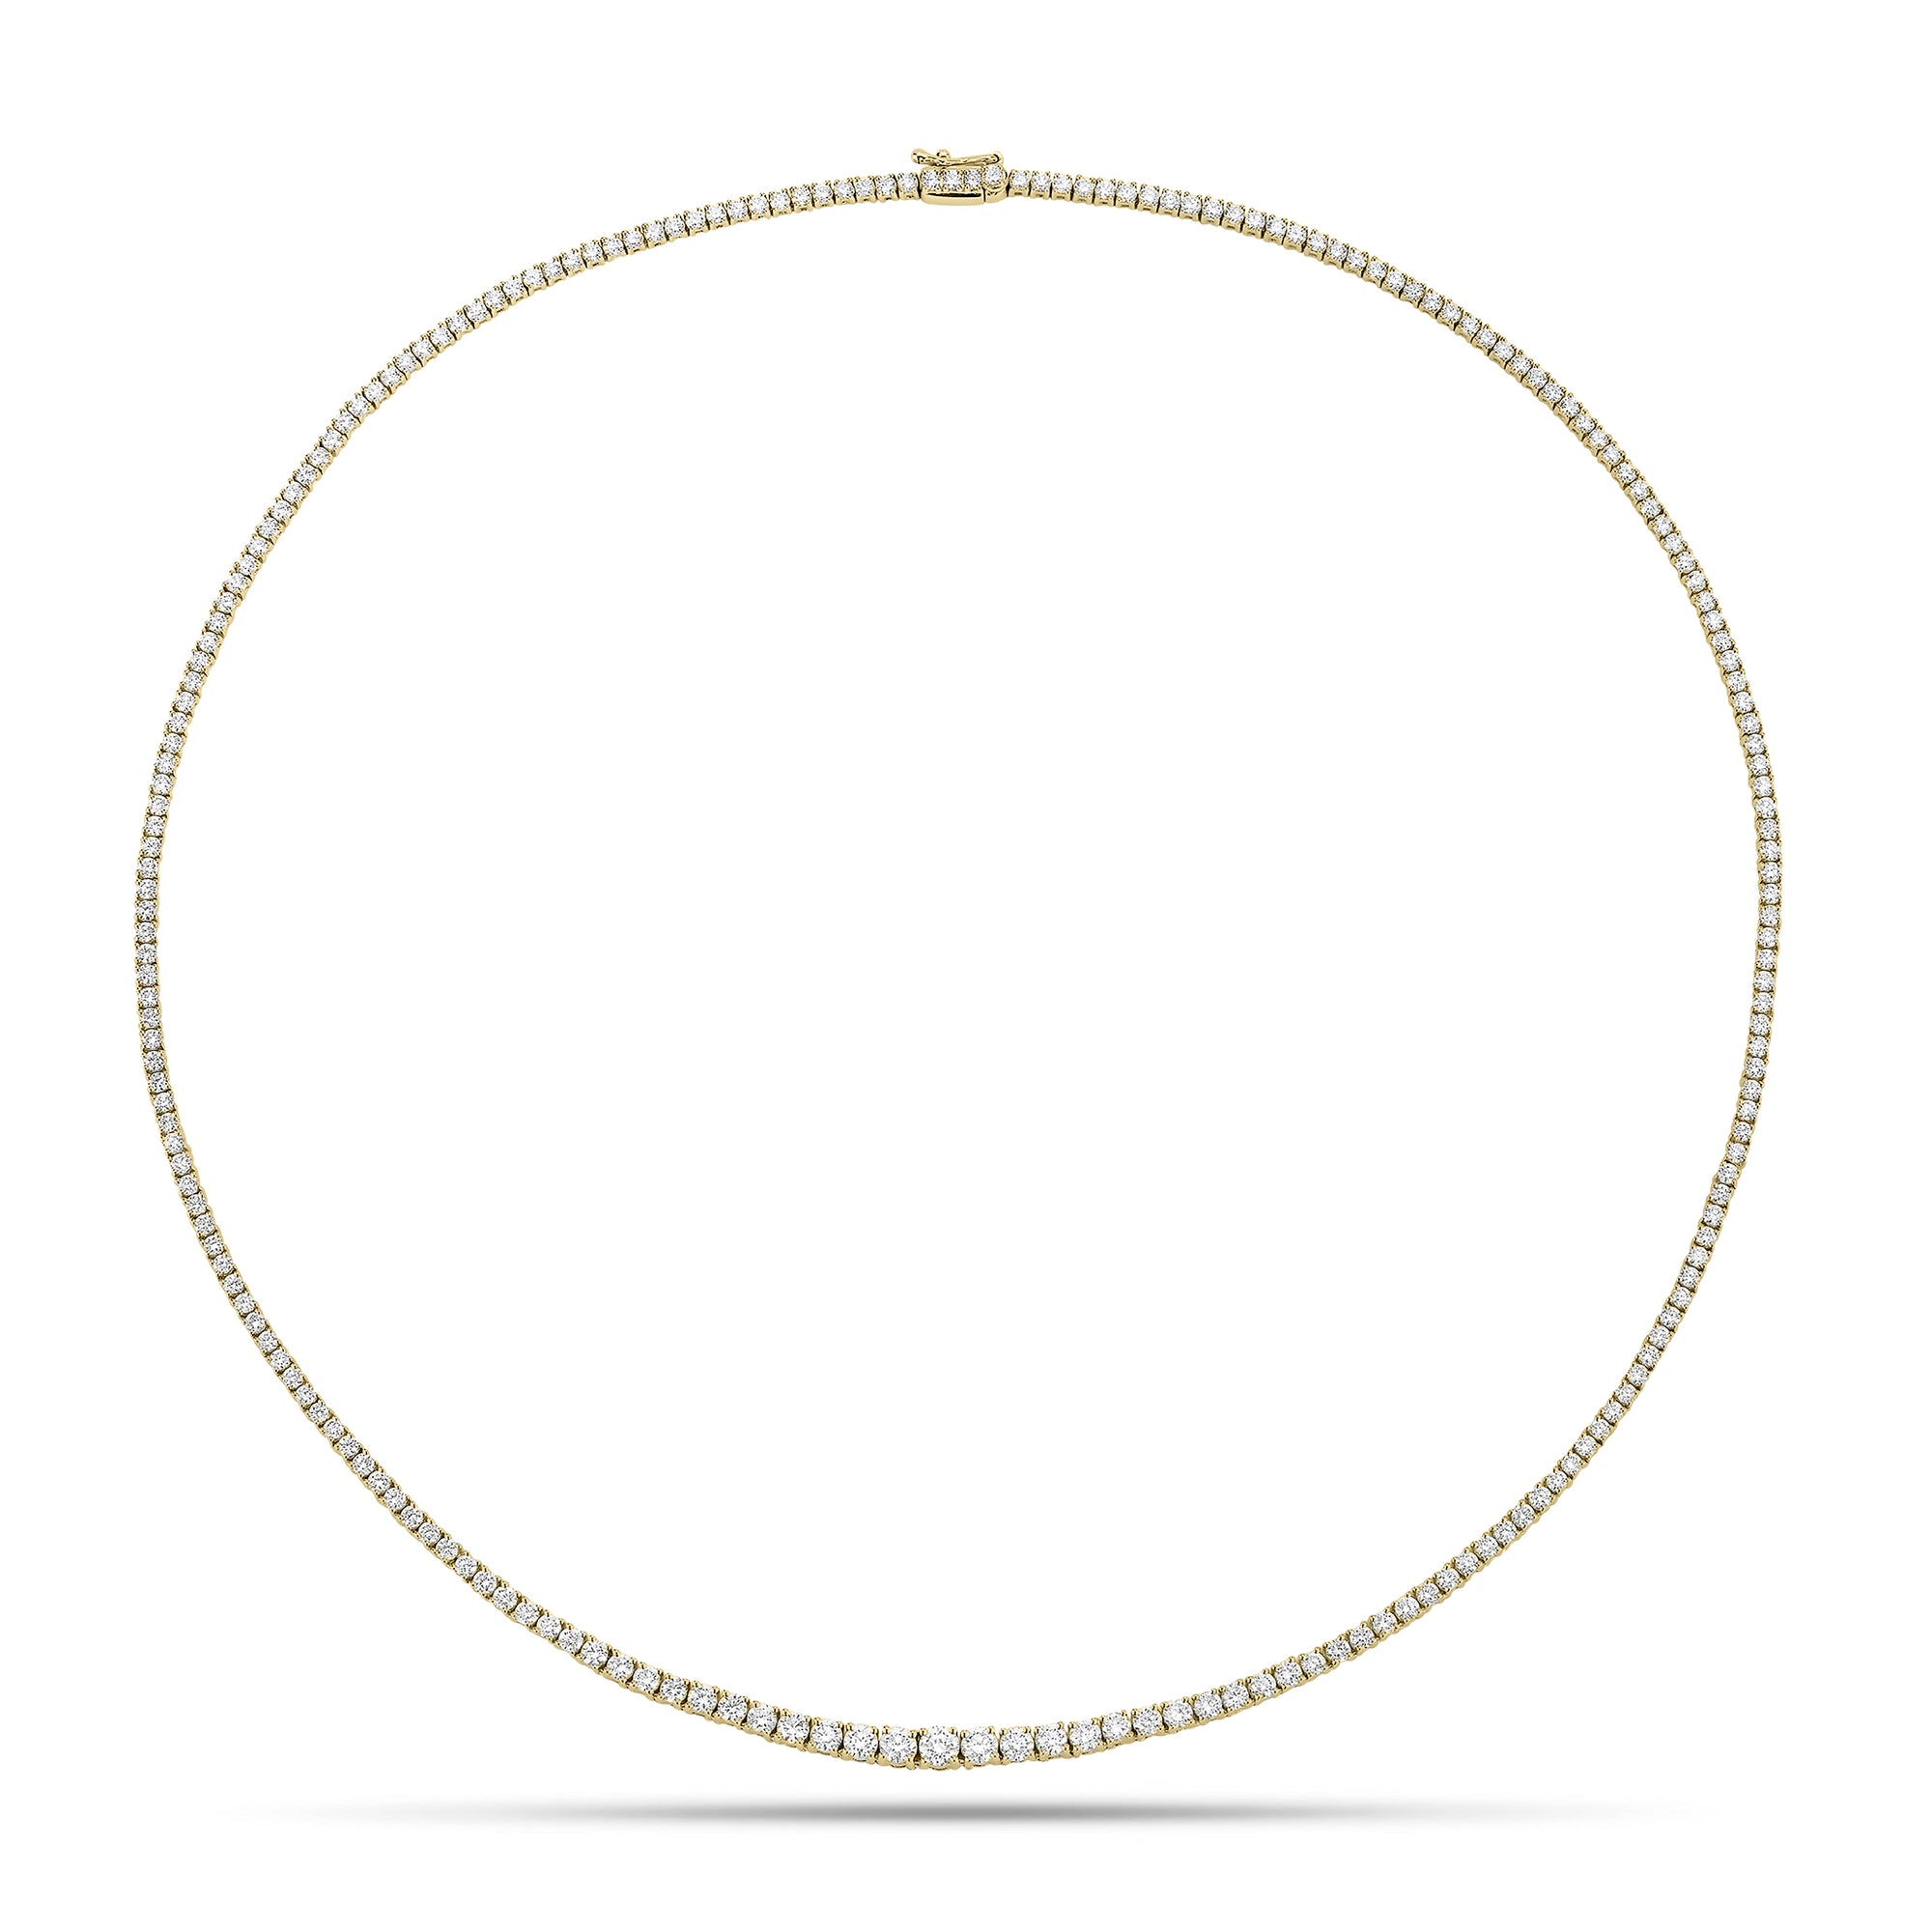 4.94 ct Diamond Graduated Tennis Necklace - 18K gold weighing 15.03 grams  - 216 round diamonds weighing 4.94 carats